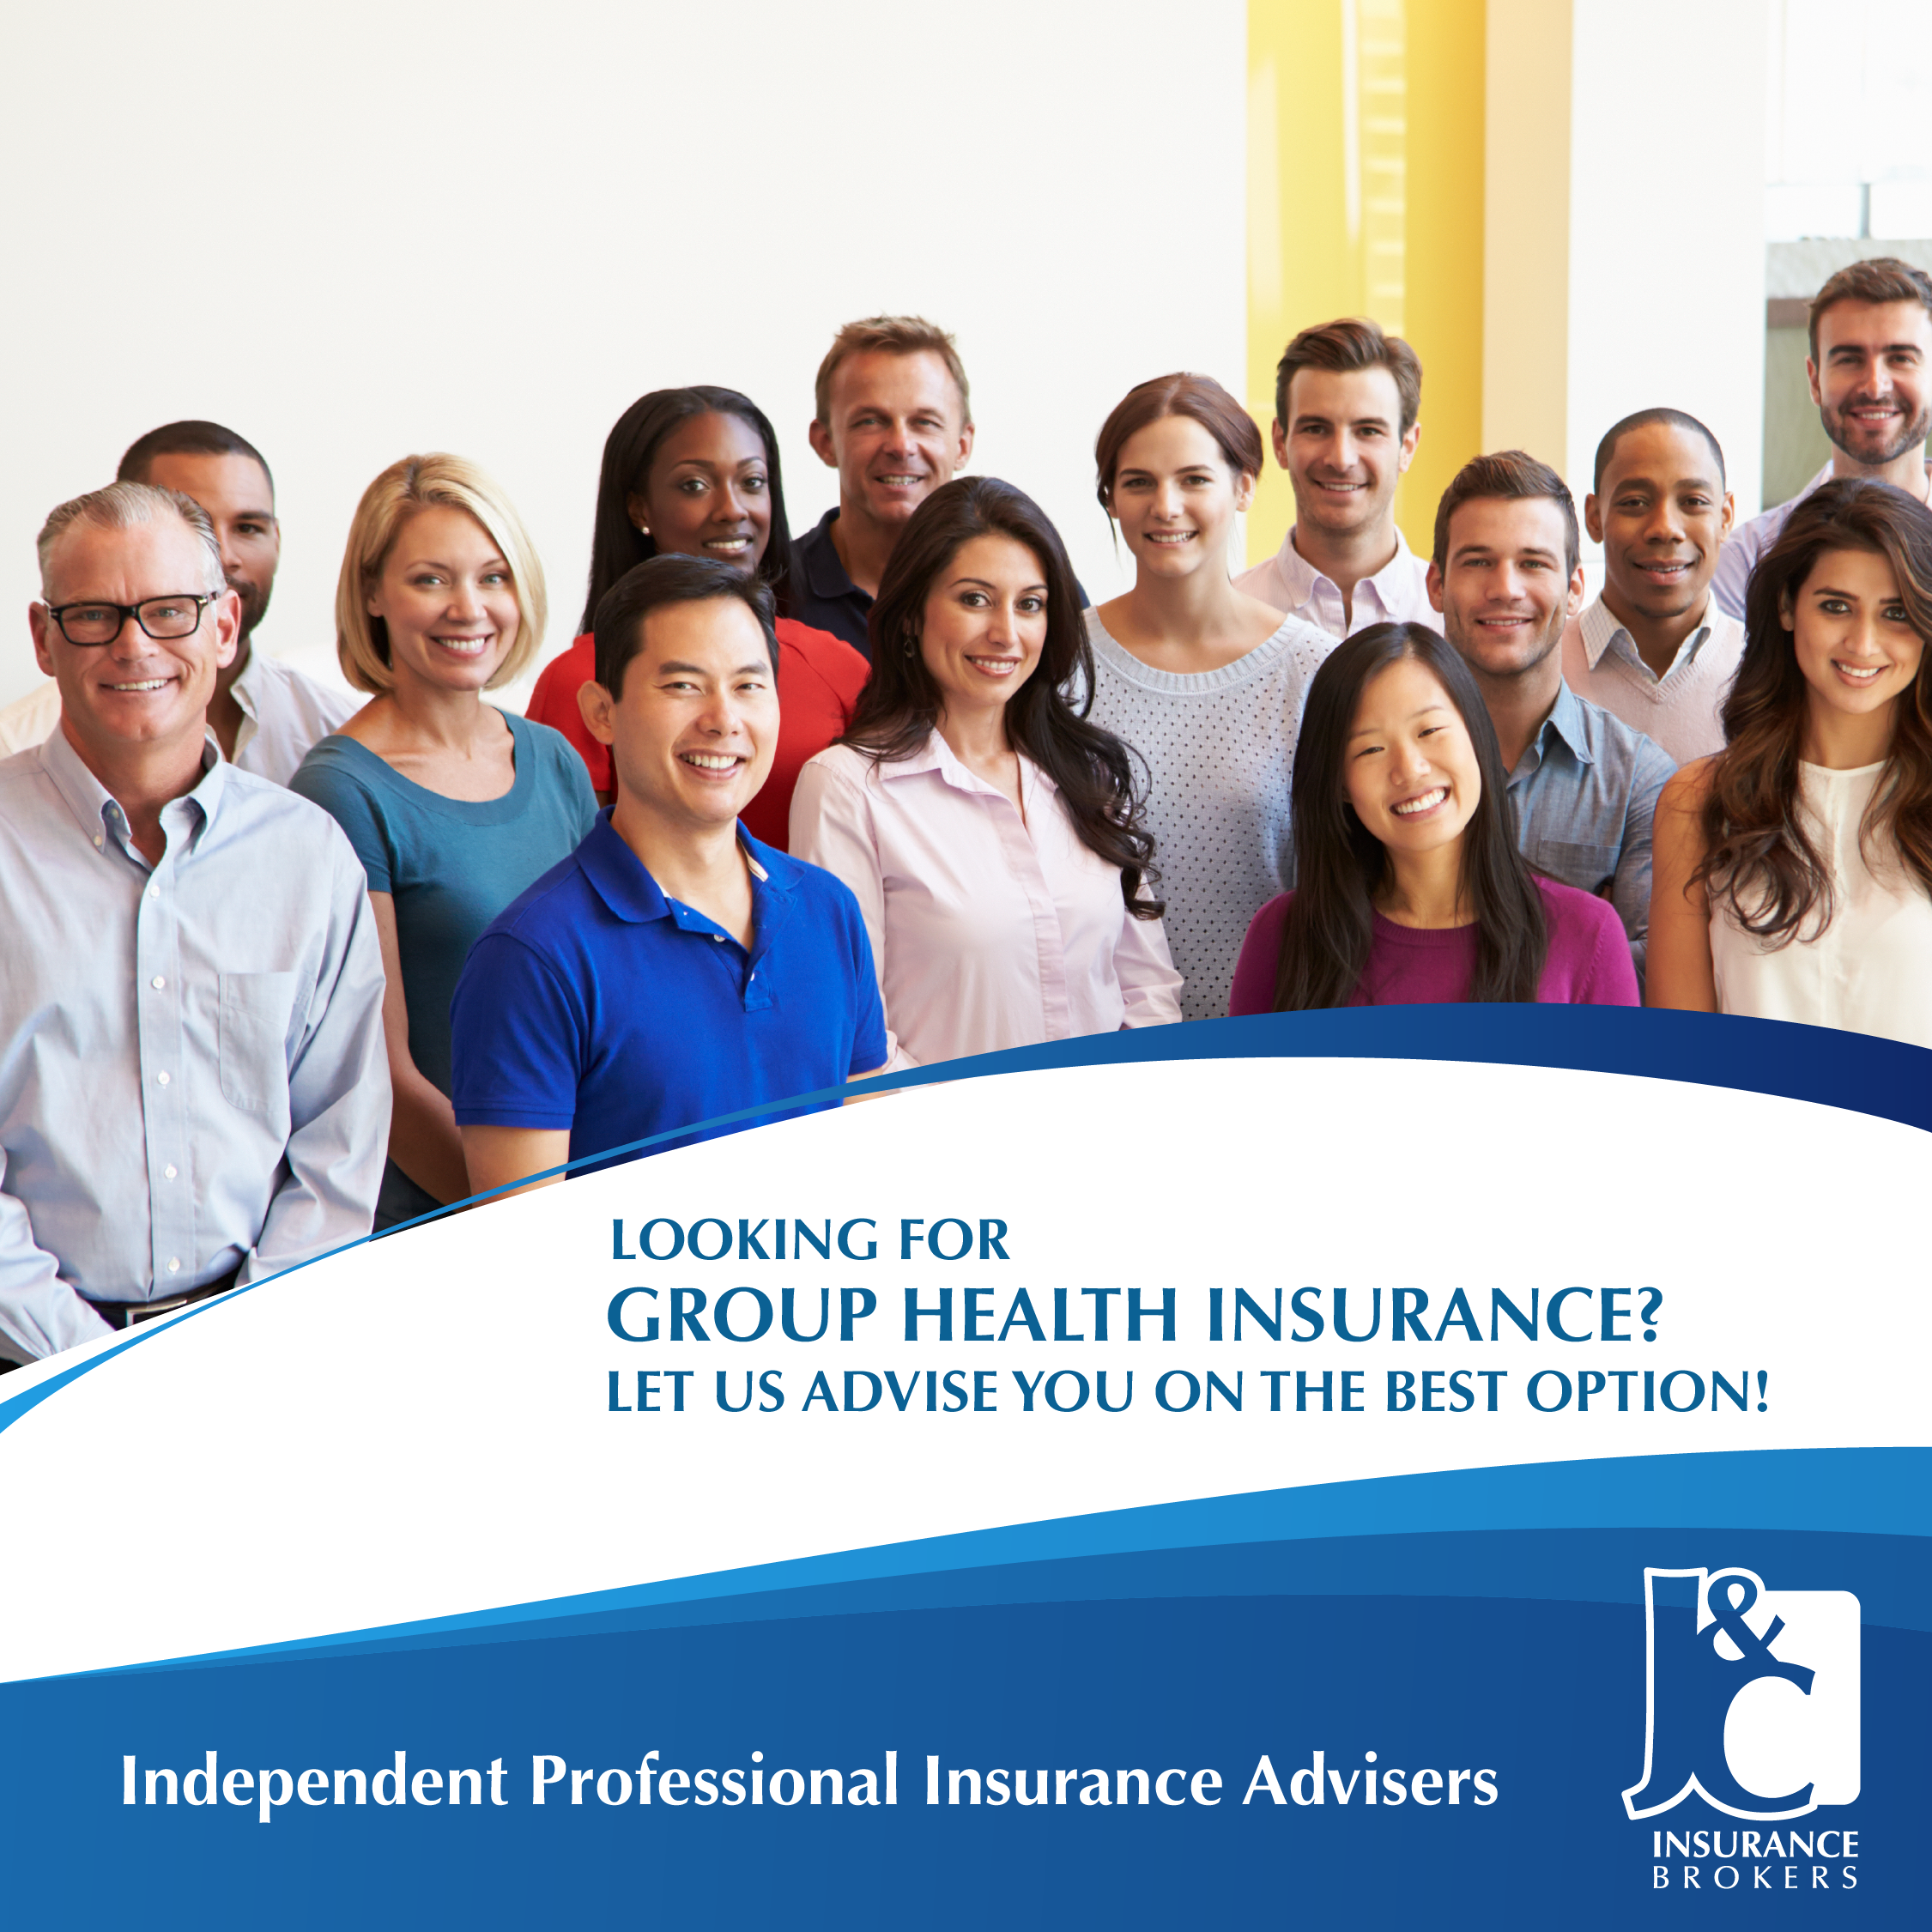 J&C Insurance Brokers - Group Health Insurance